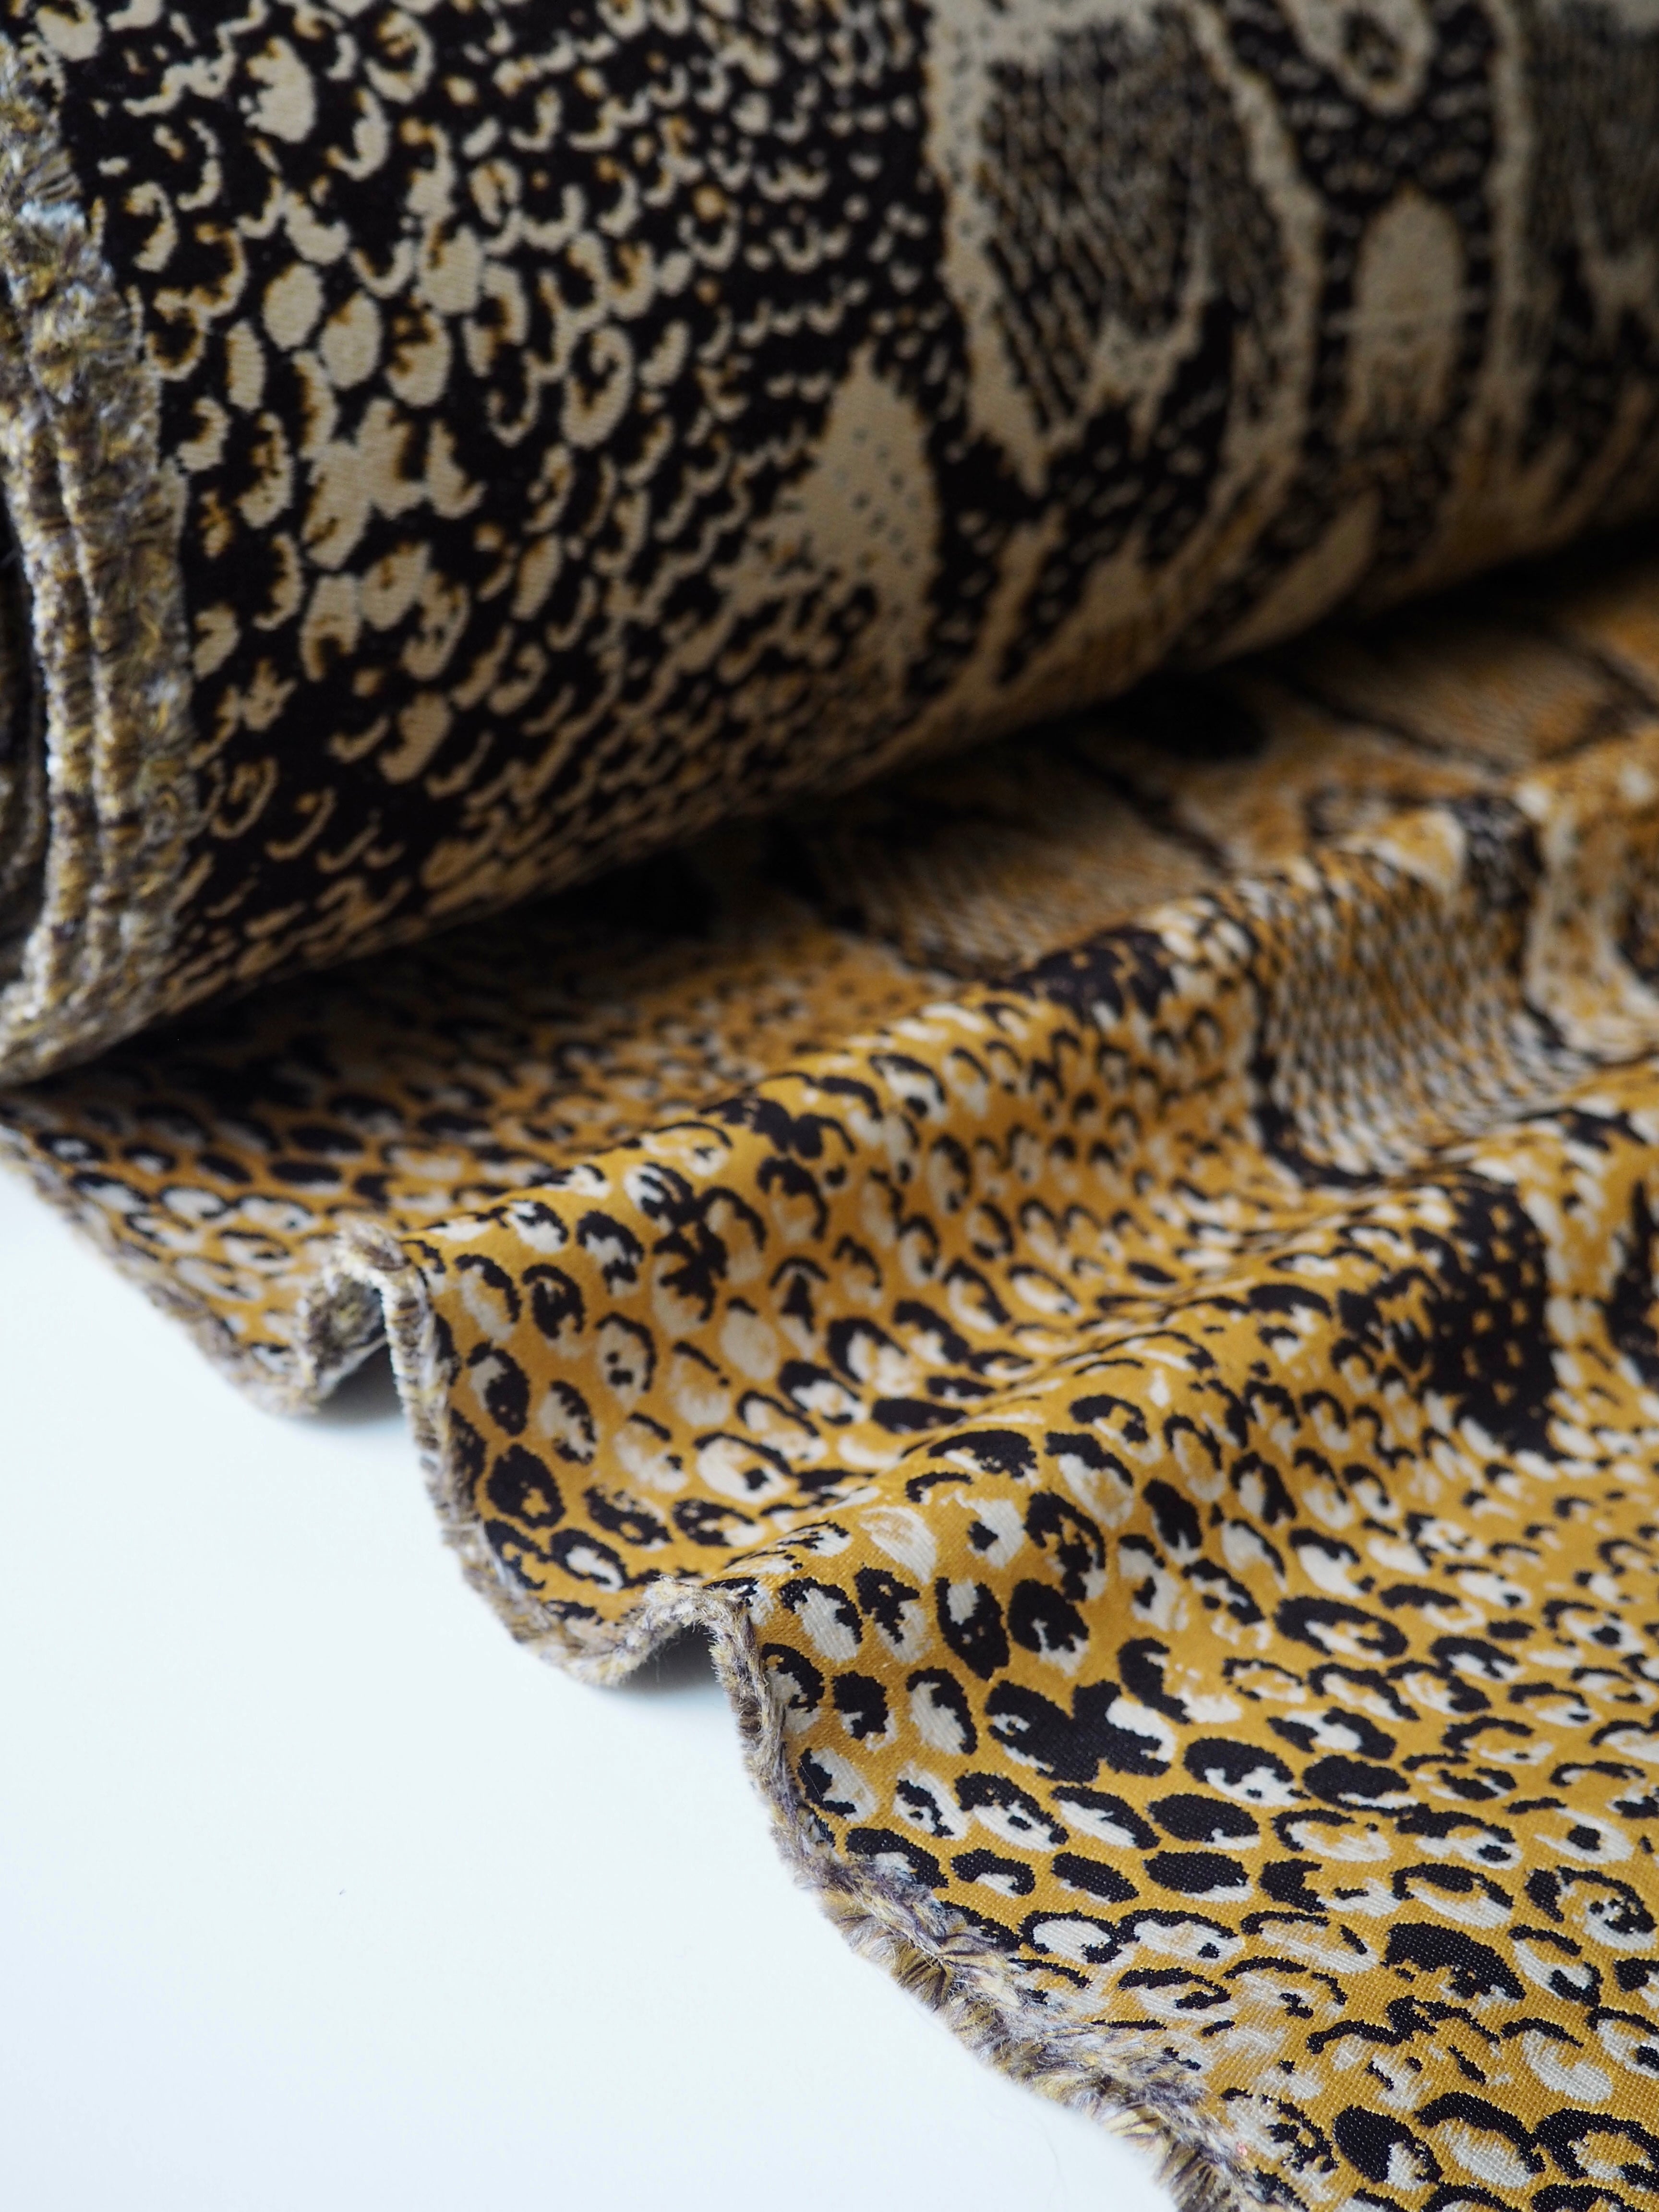 Golden Mandalas Upholstery Fabric, 6 Designs, 13 Fabric Options, Furnishing Fabric By the Yard, 039